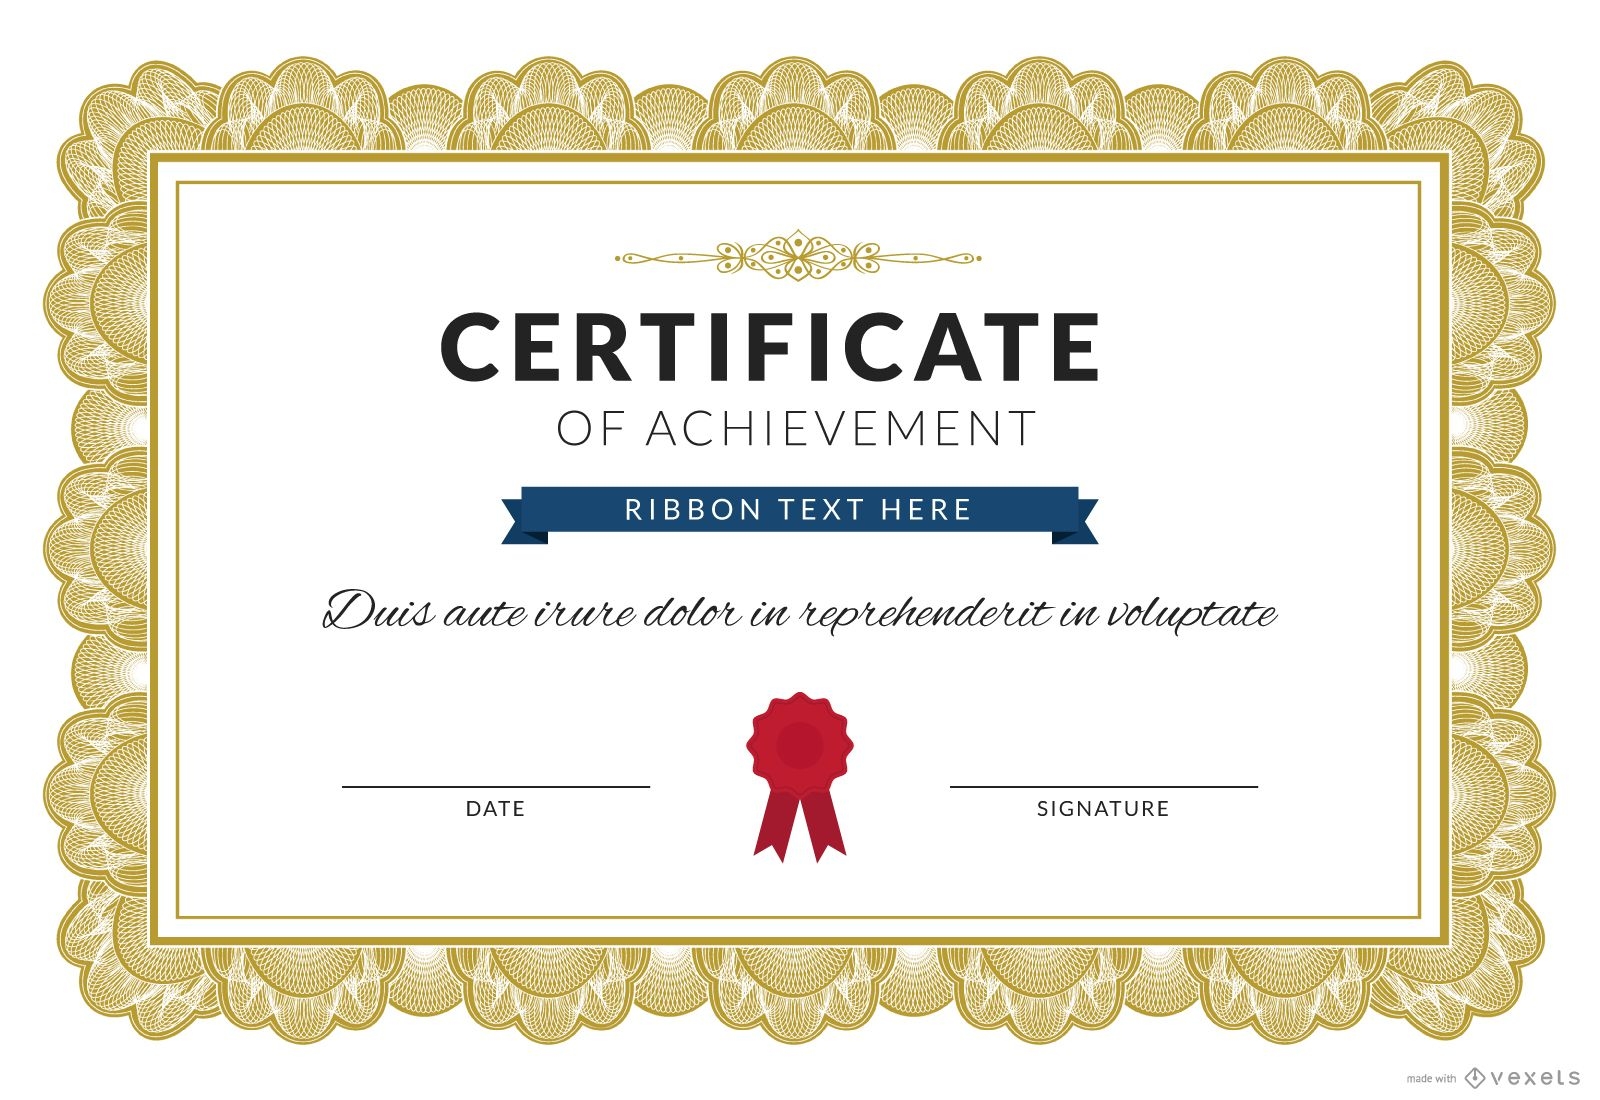 certificate-of-achievement-maker-editable-design